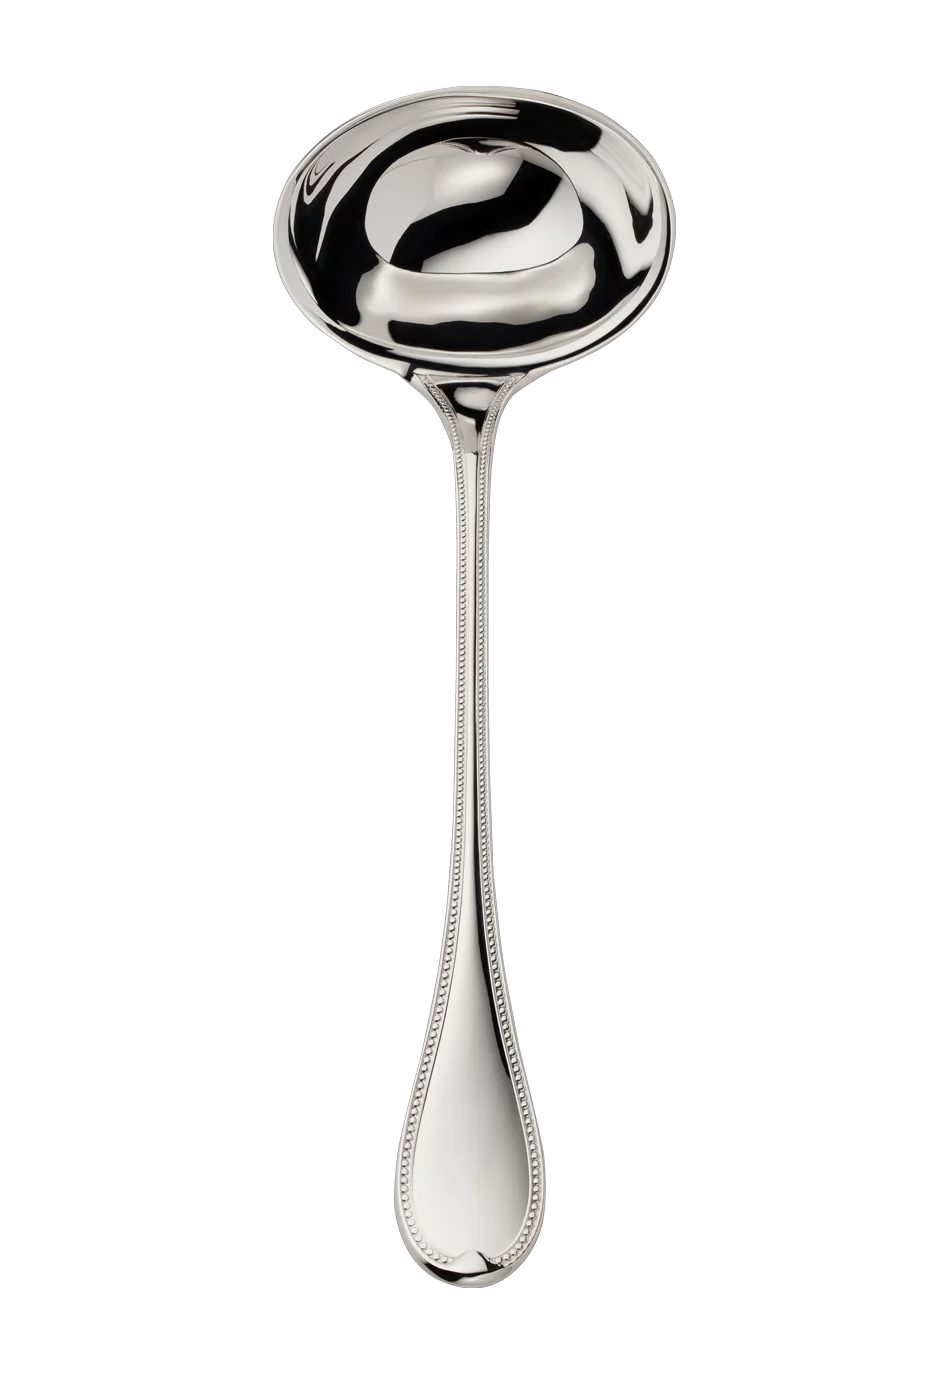 Französisch-Perl Soup Ladle (150g massive silverplated)